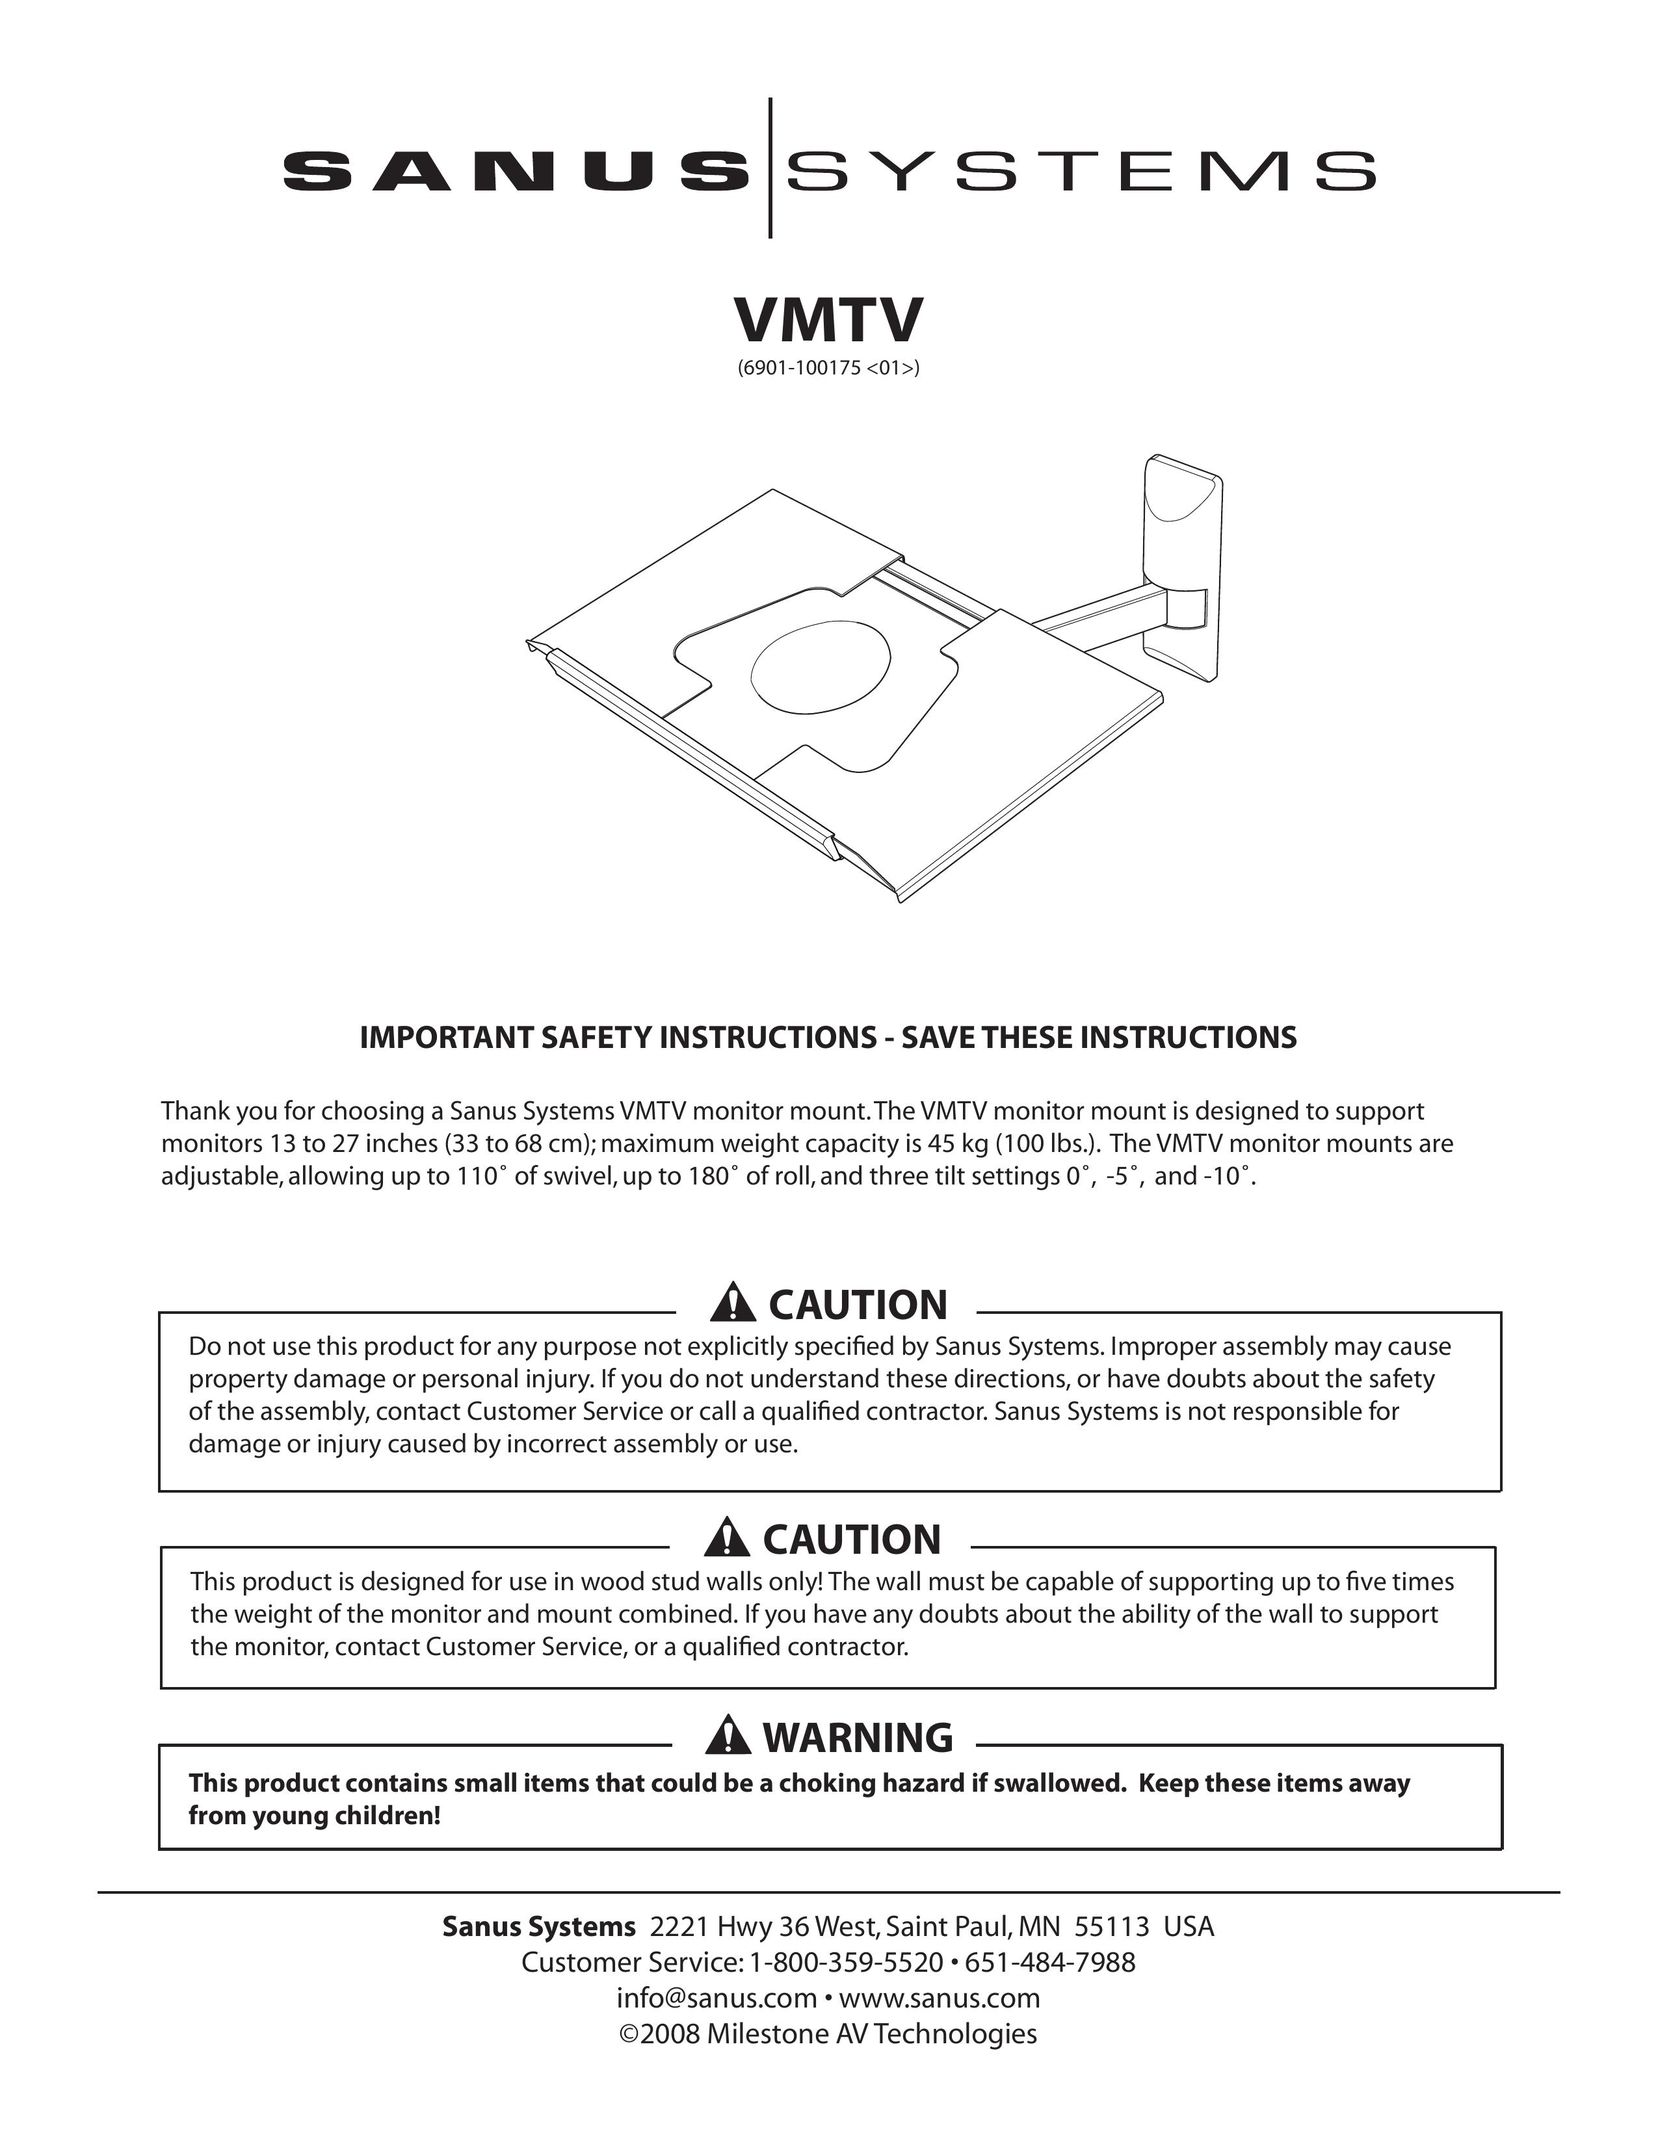 Sanus Systems VMTV Car Video System User Manual